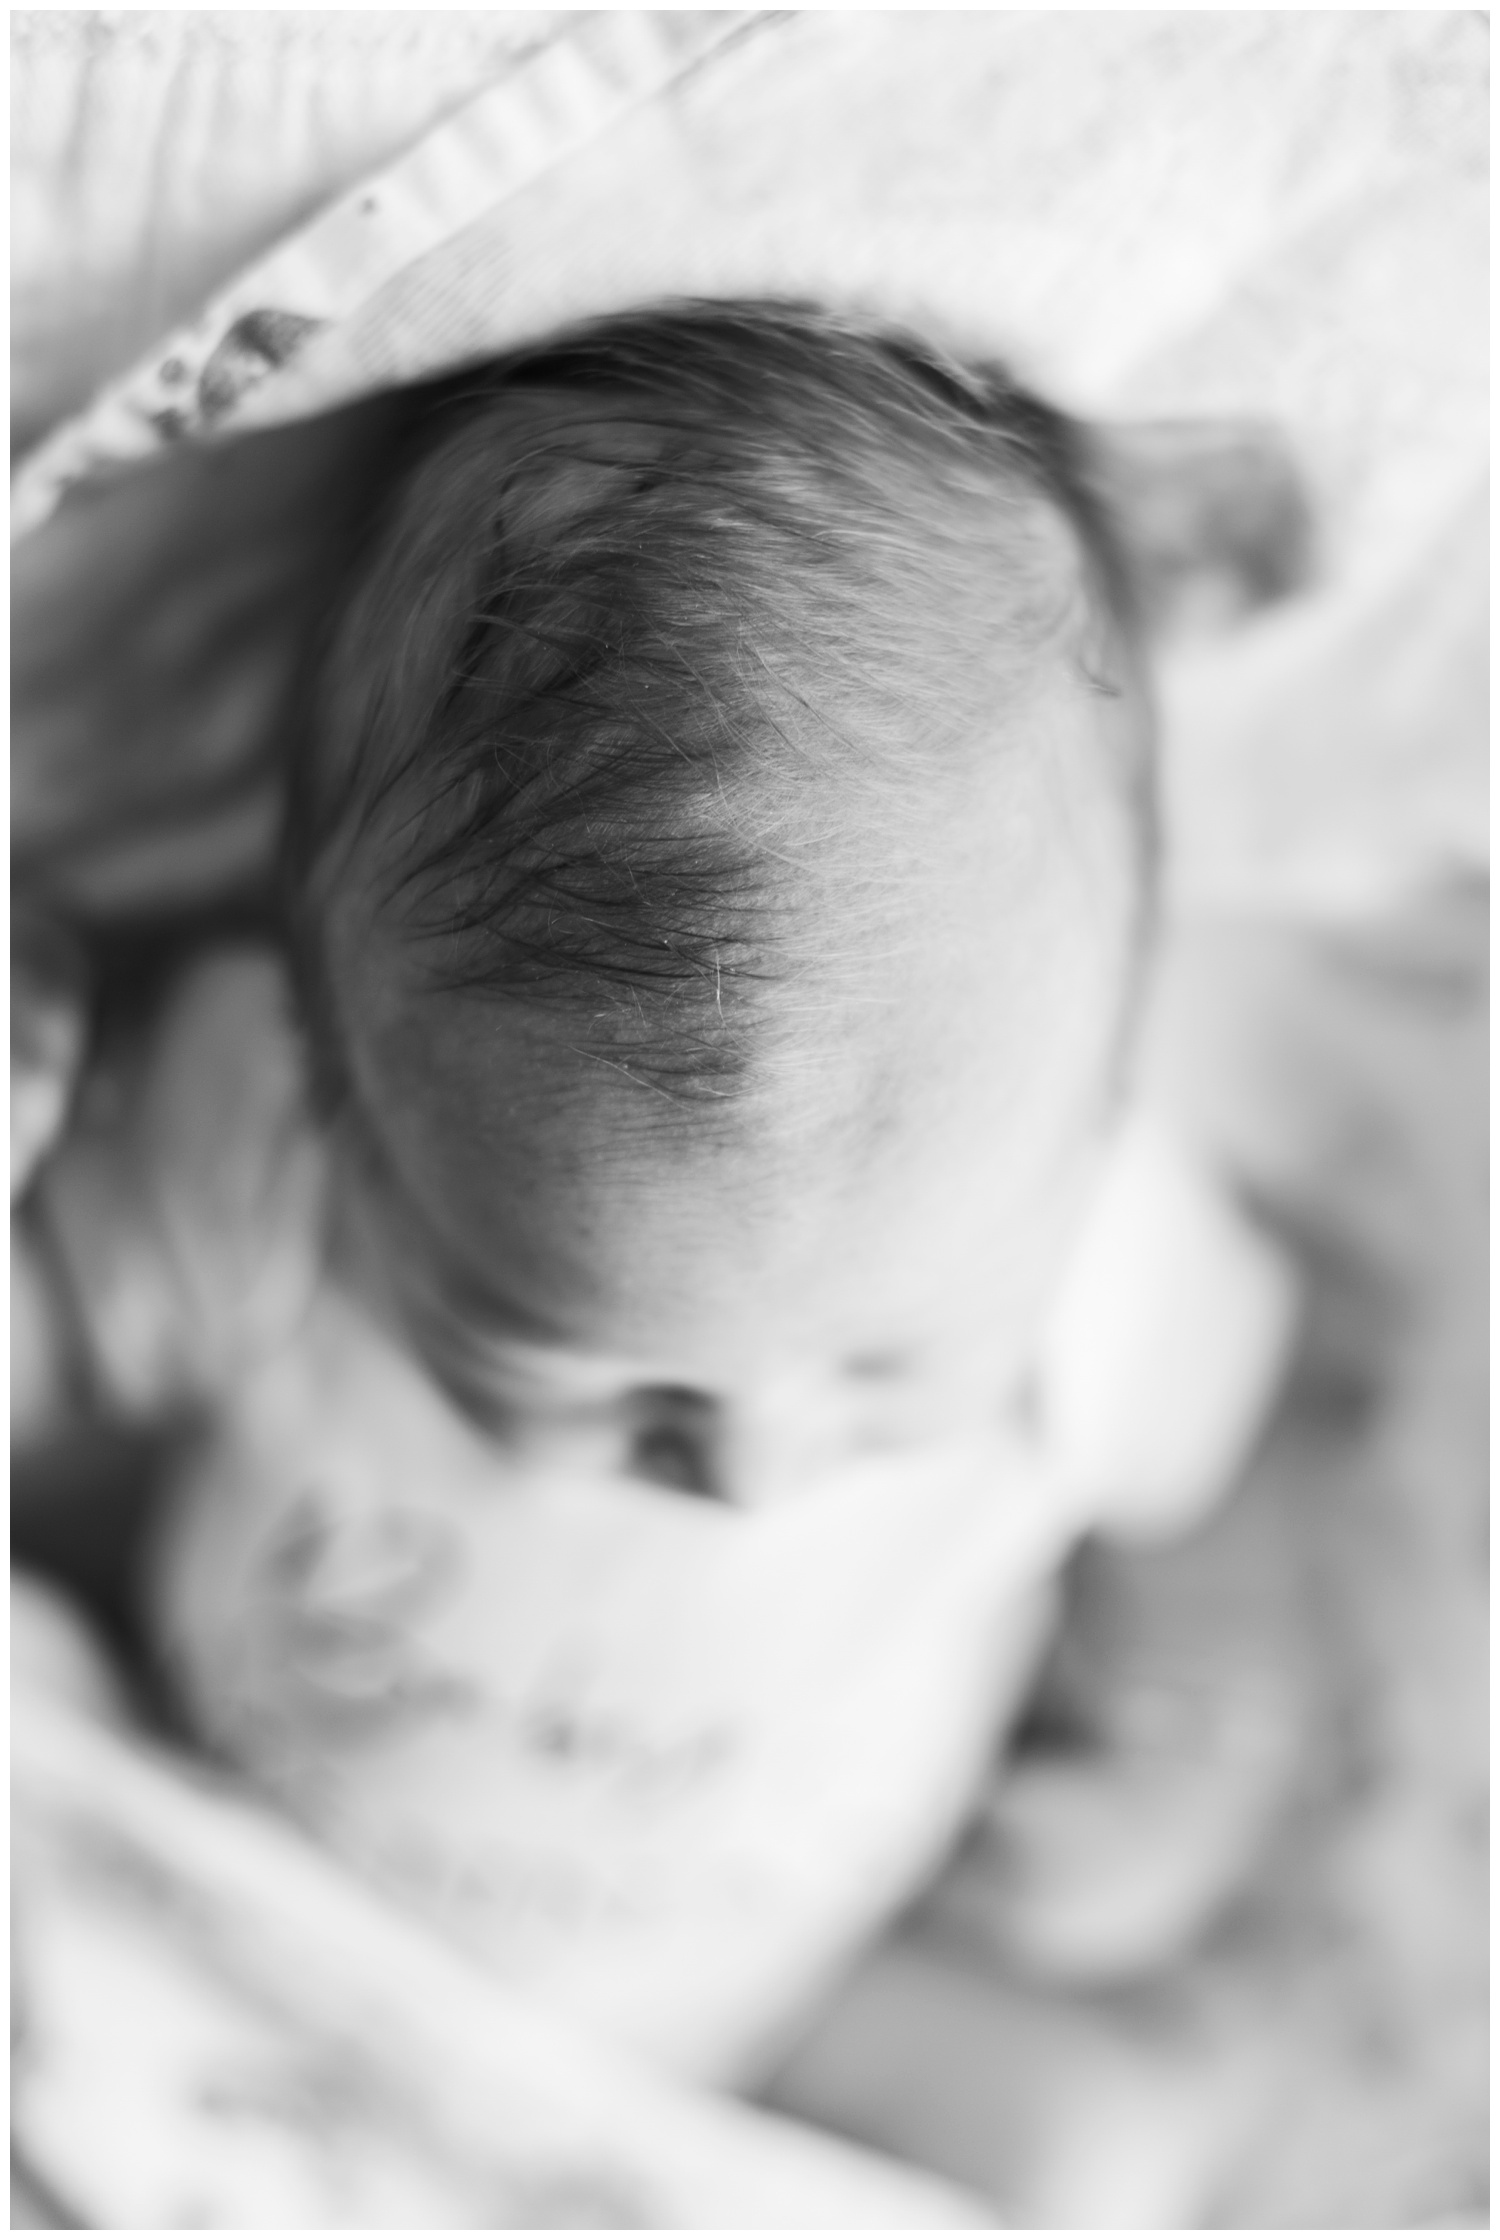 Fresh 48 hospital baby photography | Iowa Baby Photographer | CB Studio